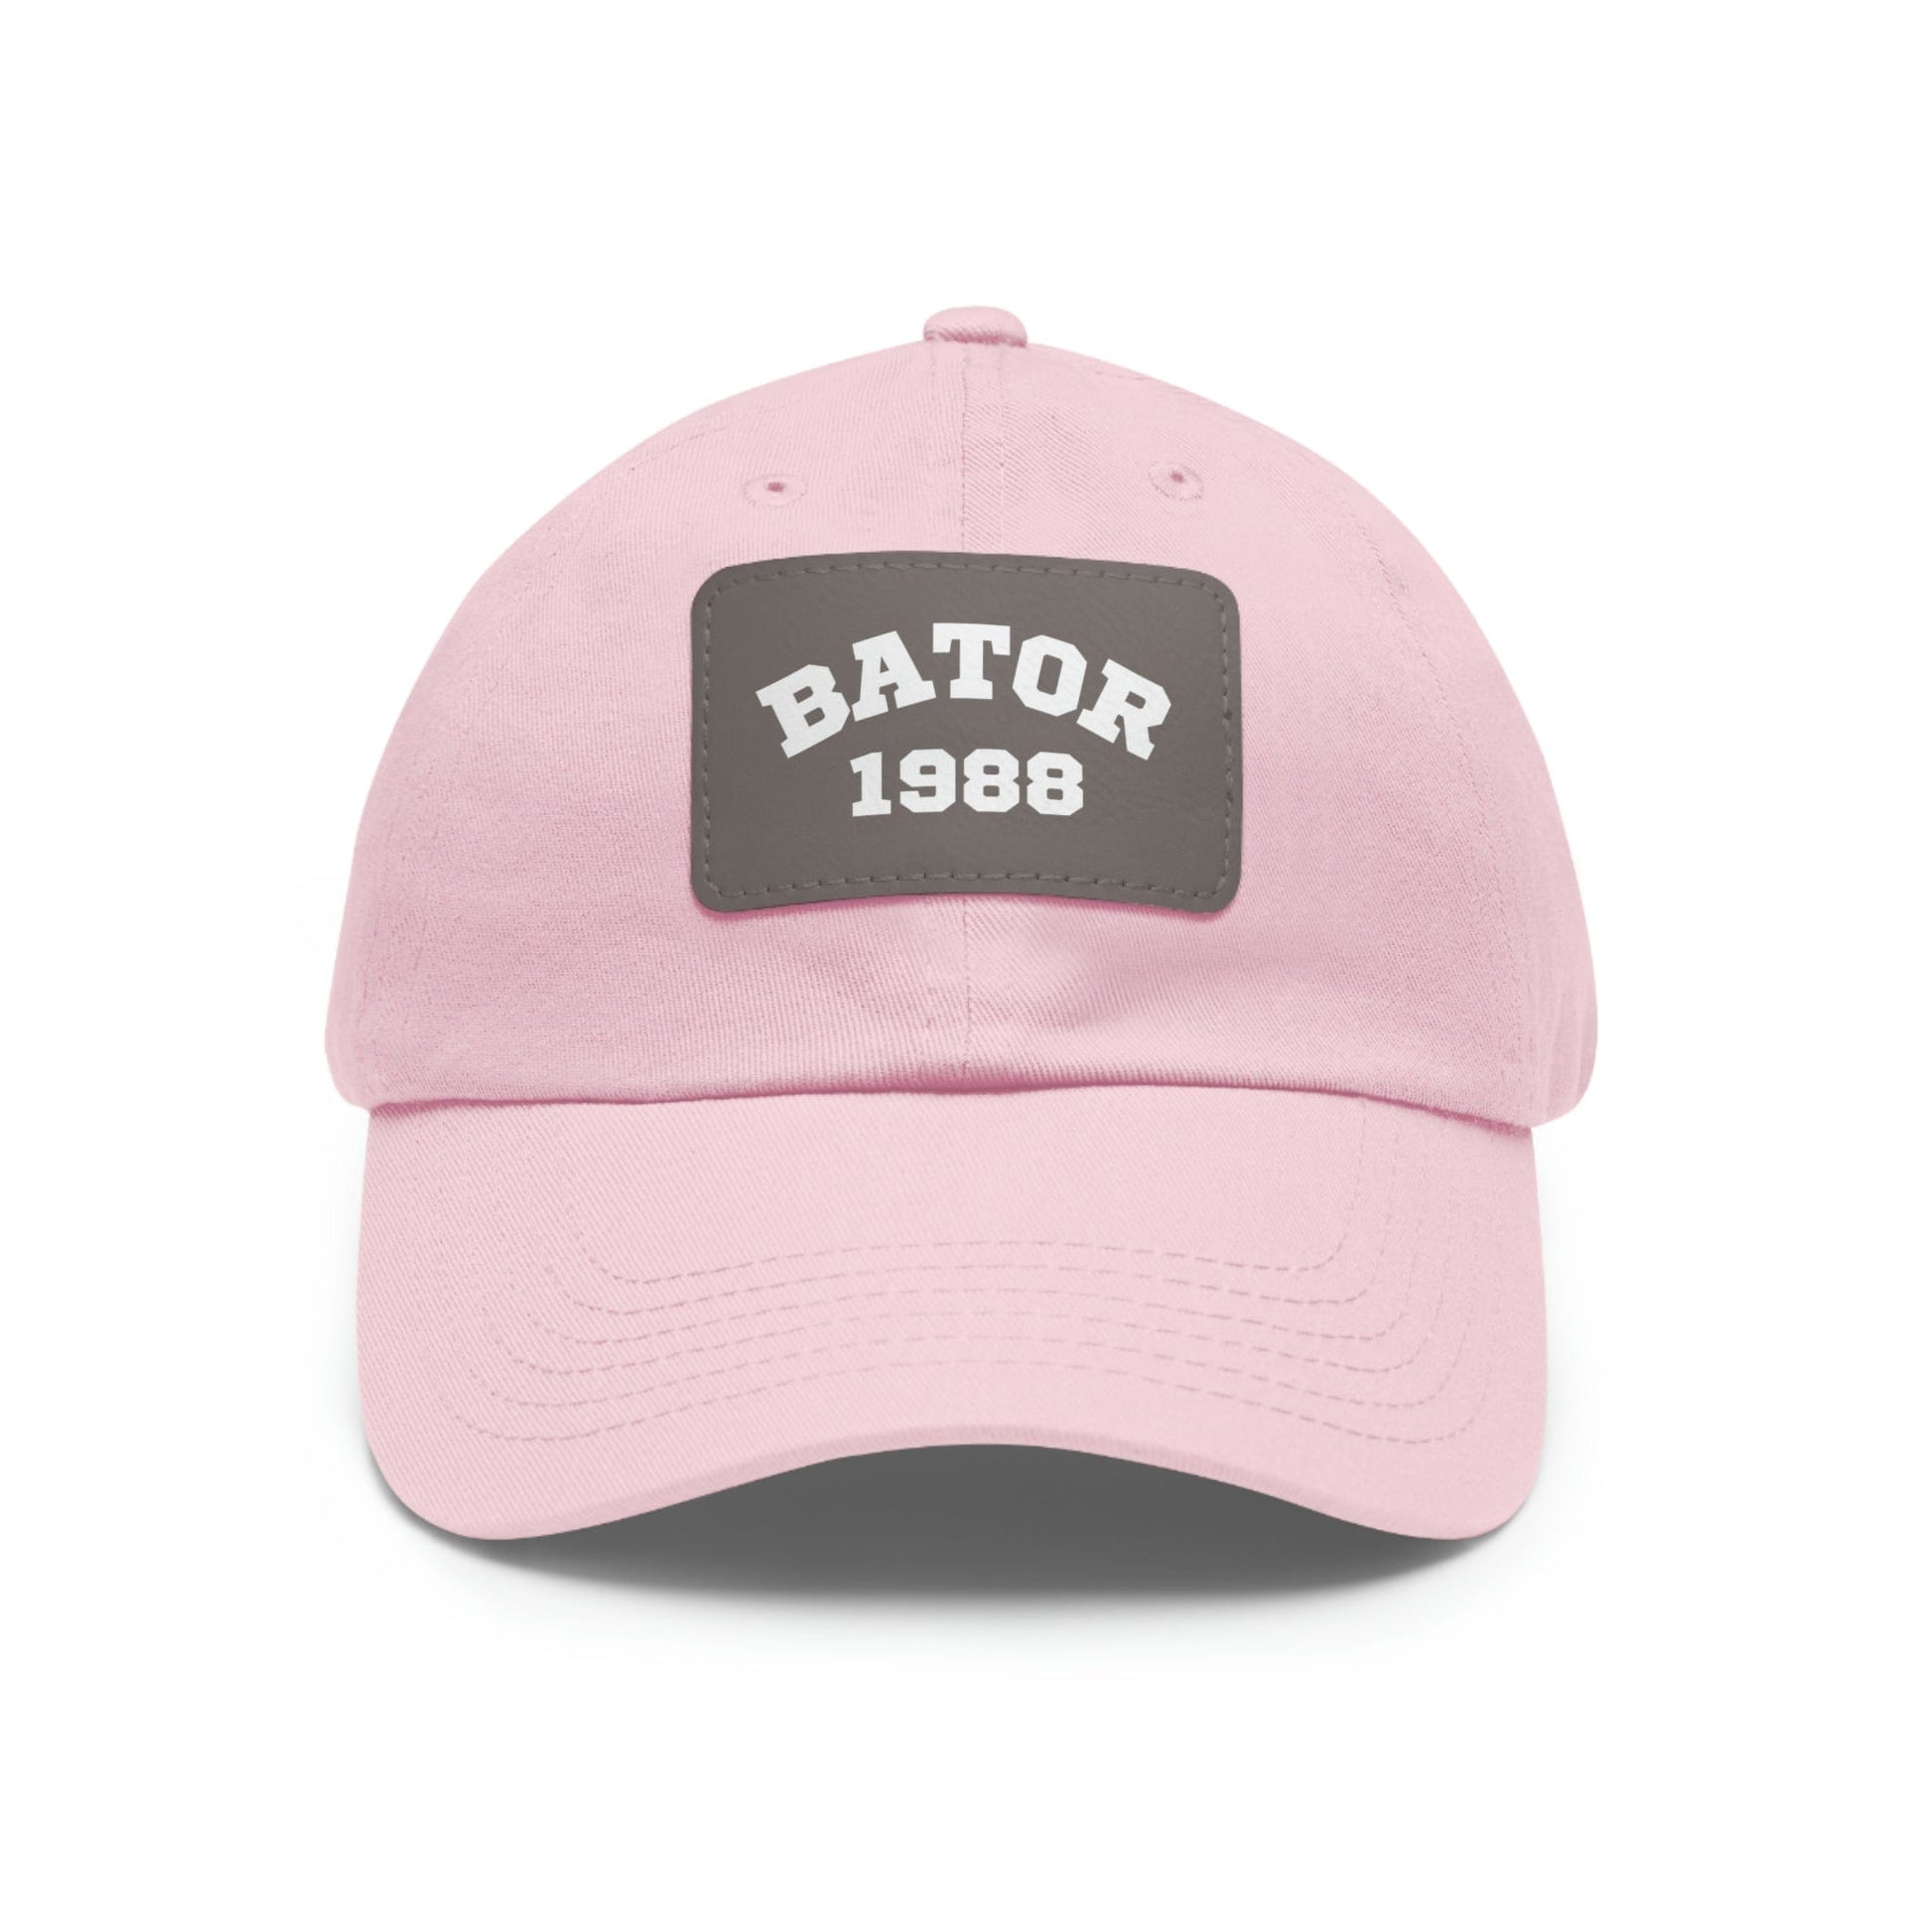 Hats Light Pink / Grey patch / Rectangle / One size OG Bator Dad Hat LEATHERDADDY BATOR